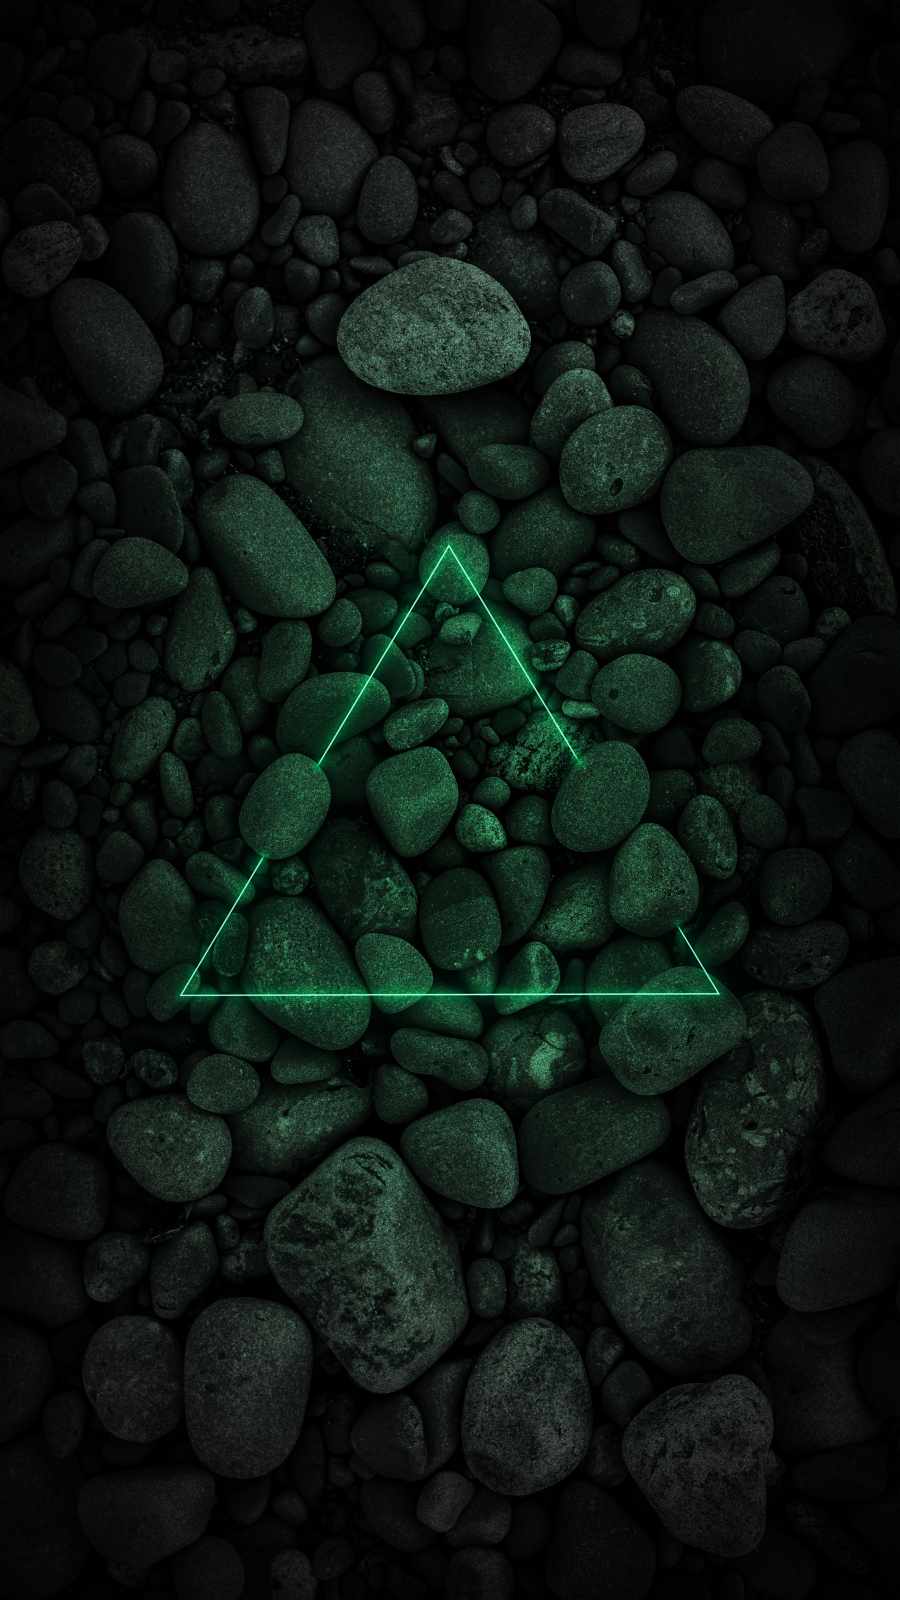 Neon Triangle over Stones